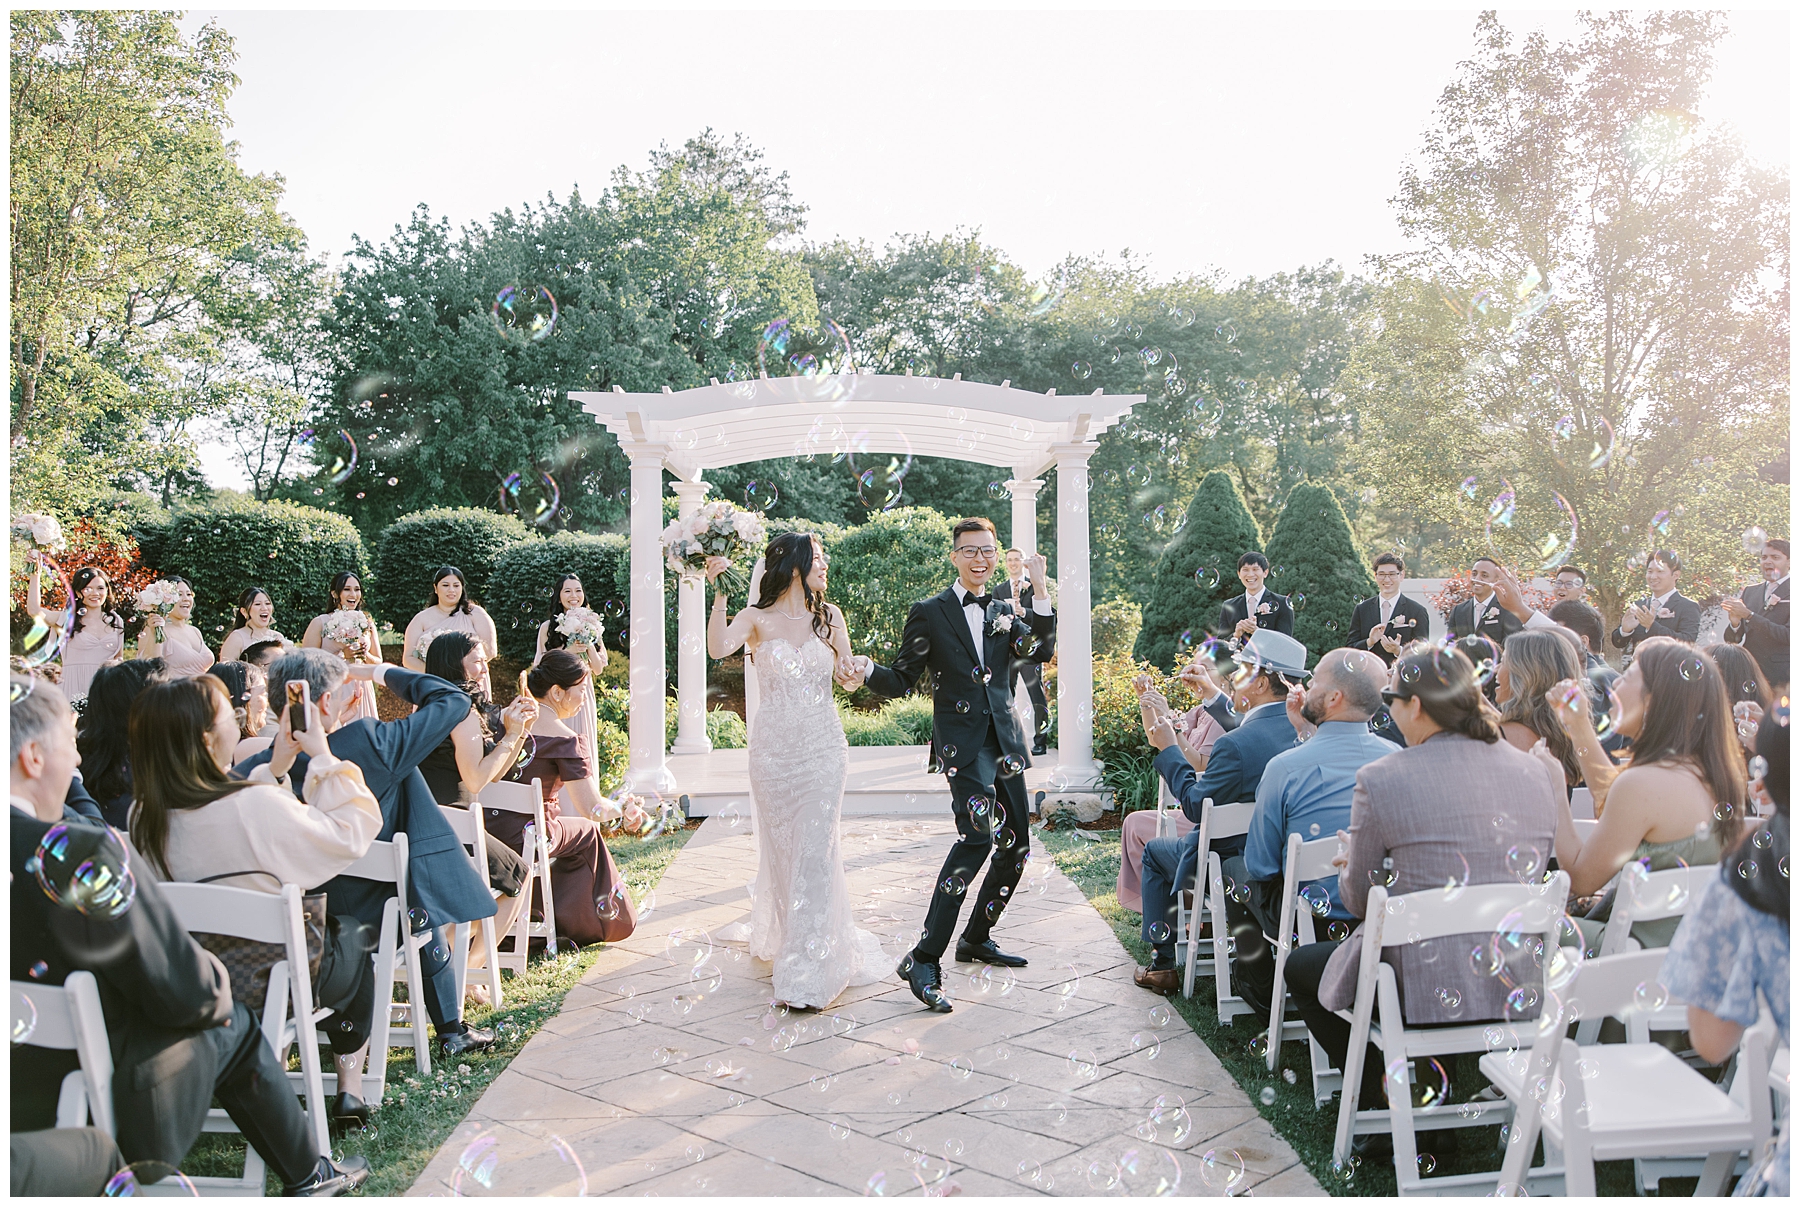 bubble exit at wedding ceremony